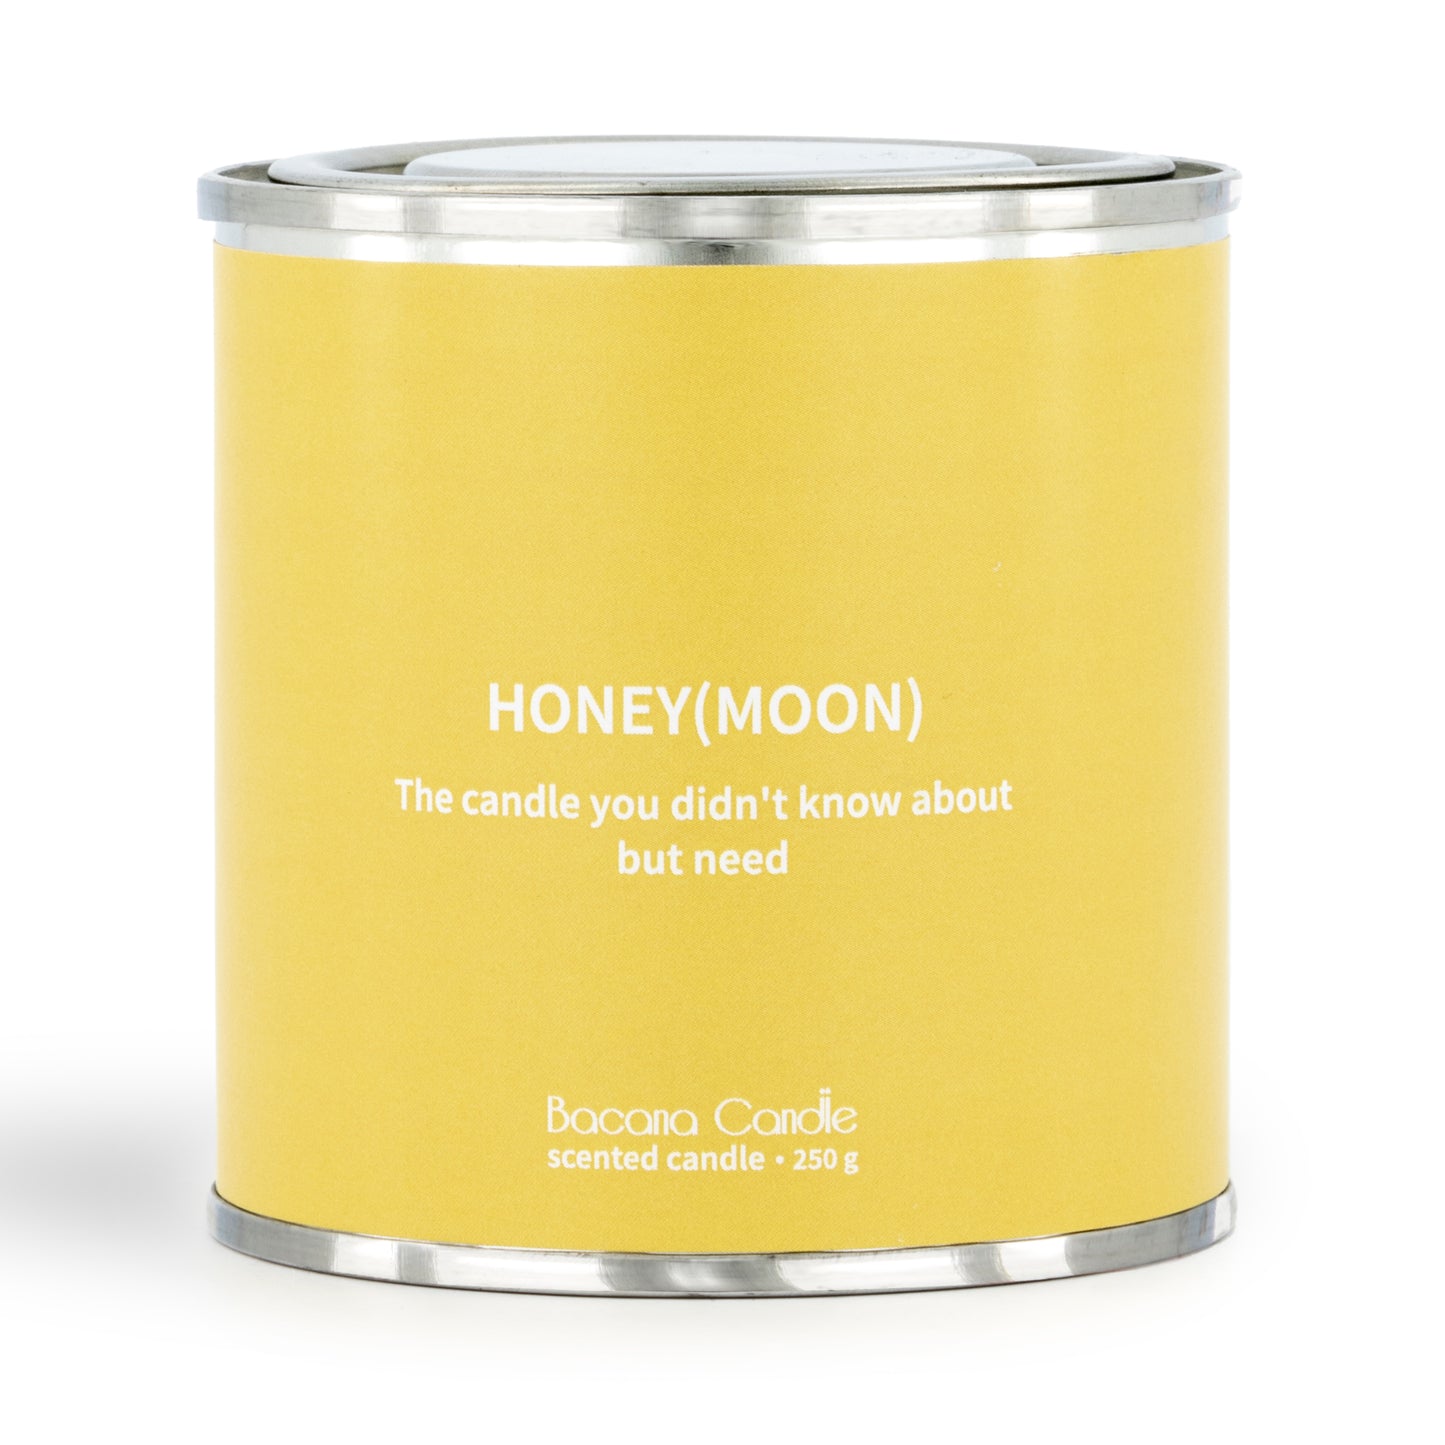 Honey(moon) - Miel